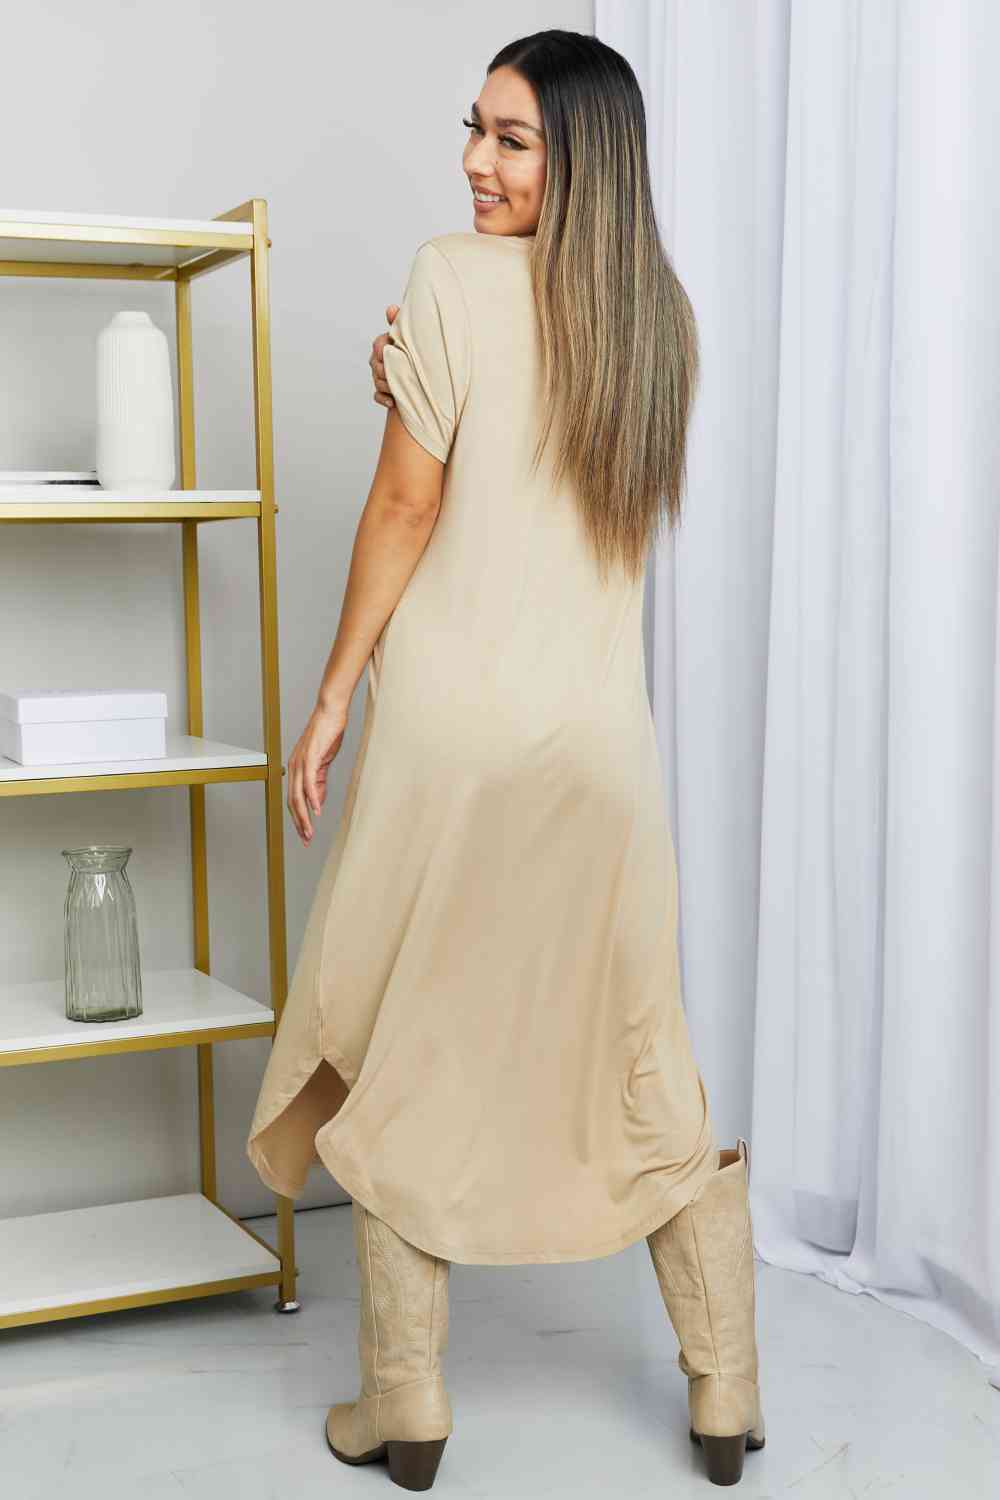 HYFVE V-Neck Short Sleeve Curved Hem Dress in Caffe Latte - Everyday-Sales.com